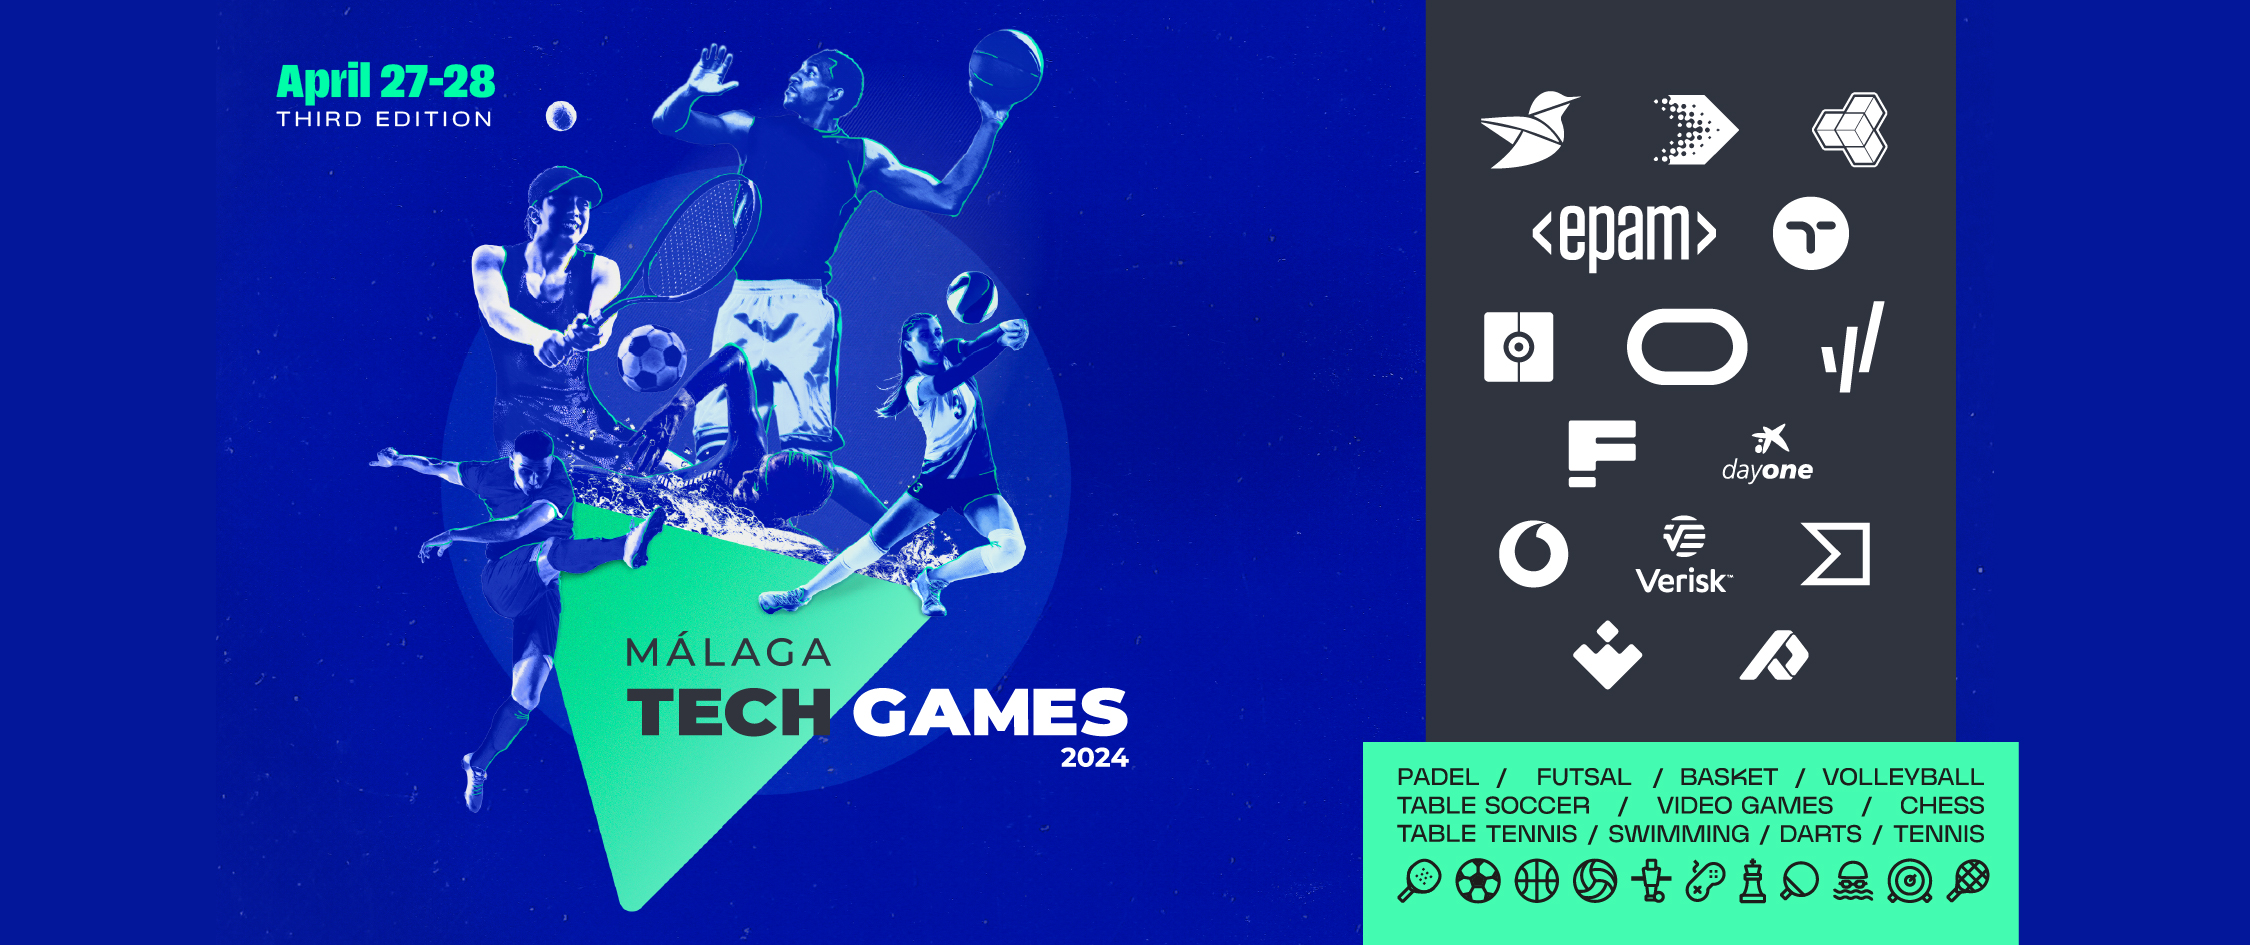 Málaga Tech Games: Innovación y deporte unidos en Málaga 59